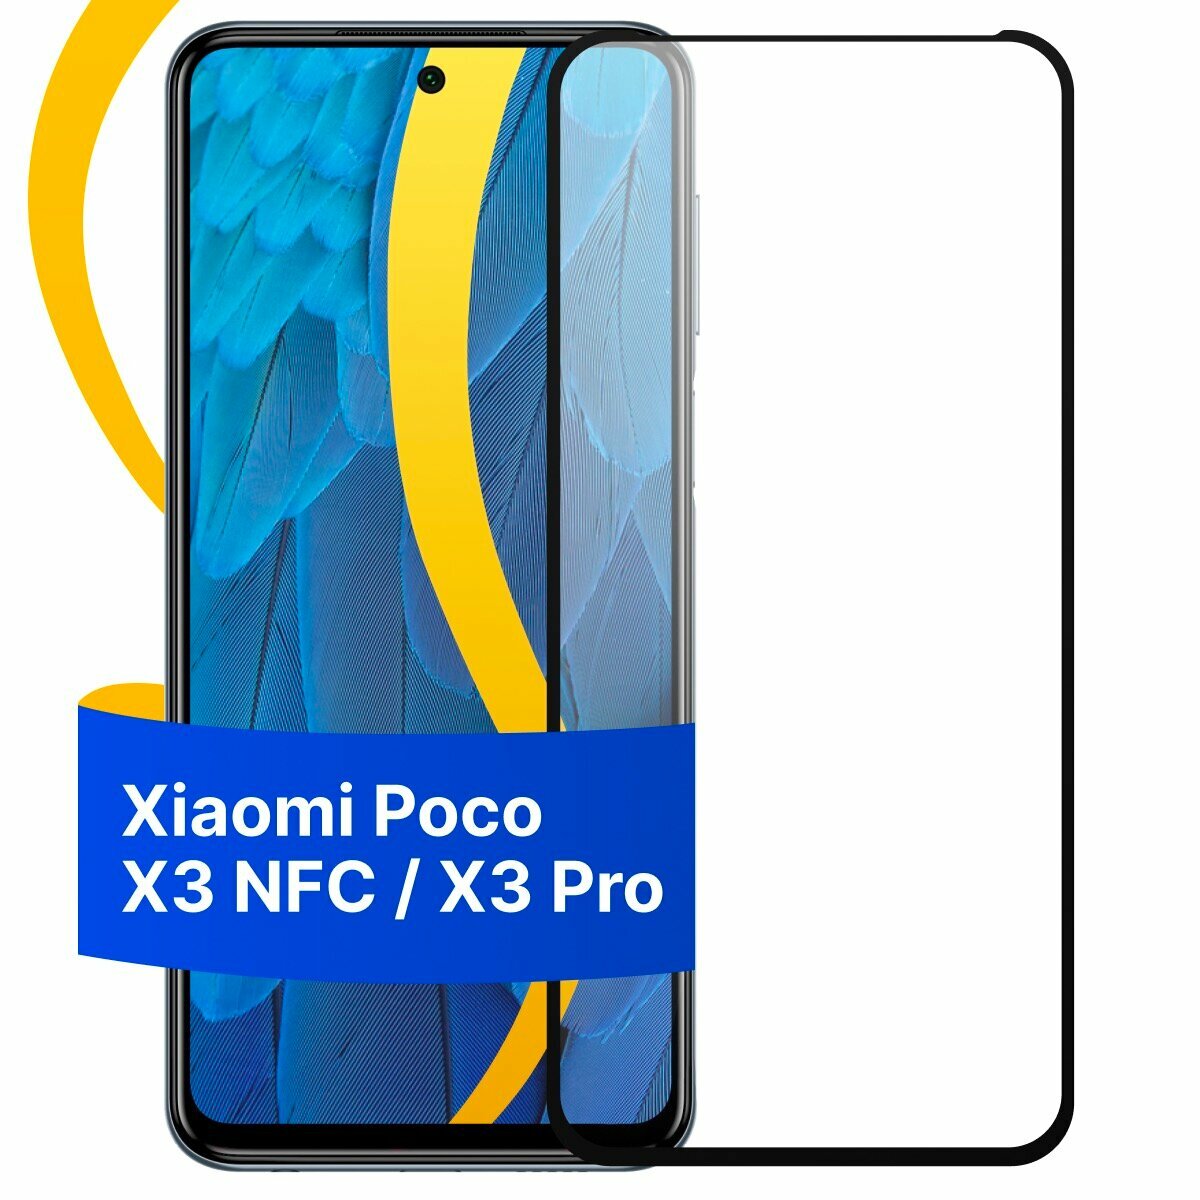 Глянцевое защитное стекло для Xiaomi Poco X3 Pro и Xiaomi Poco X3 NFC / Противоударное стекло с олеофобным покрытием на телефон Сяоми Поко Х3 Про и Сяоми Поко Х3 НФС